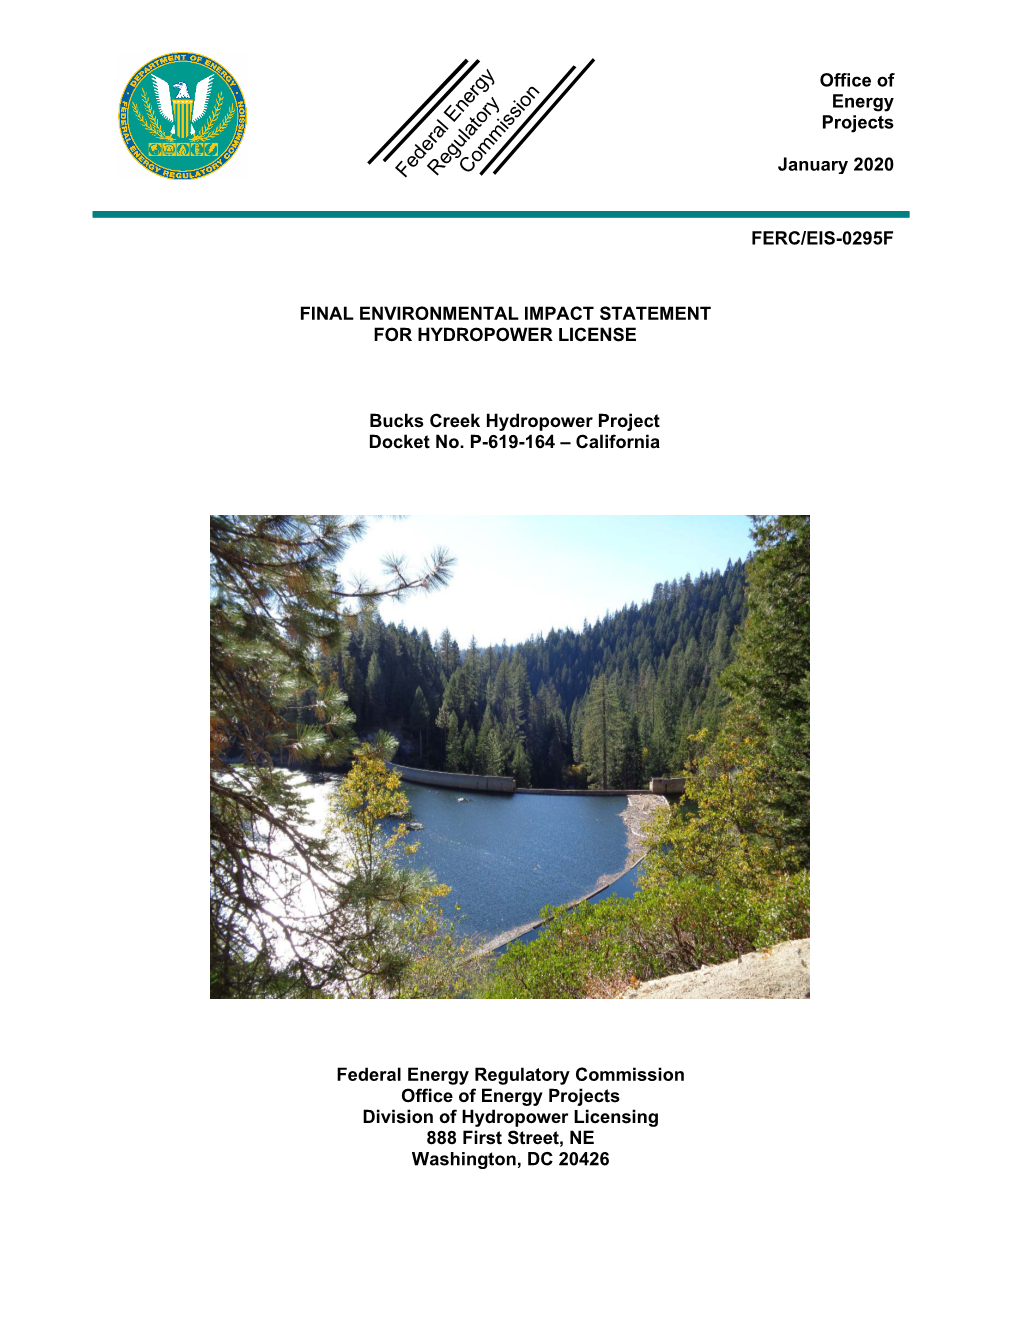 Bucks Creek Hydropower Project Docket No. P-619-164 – California